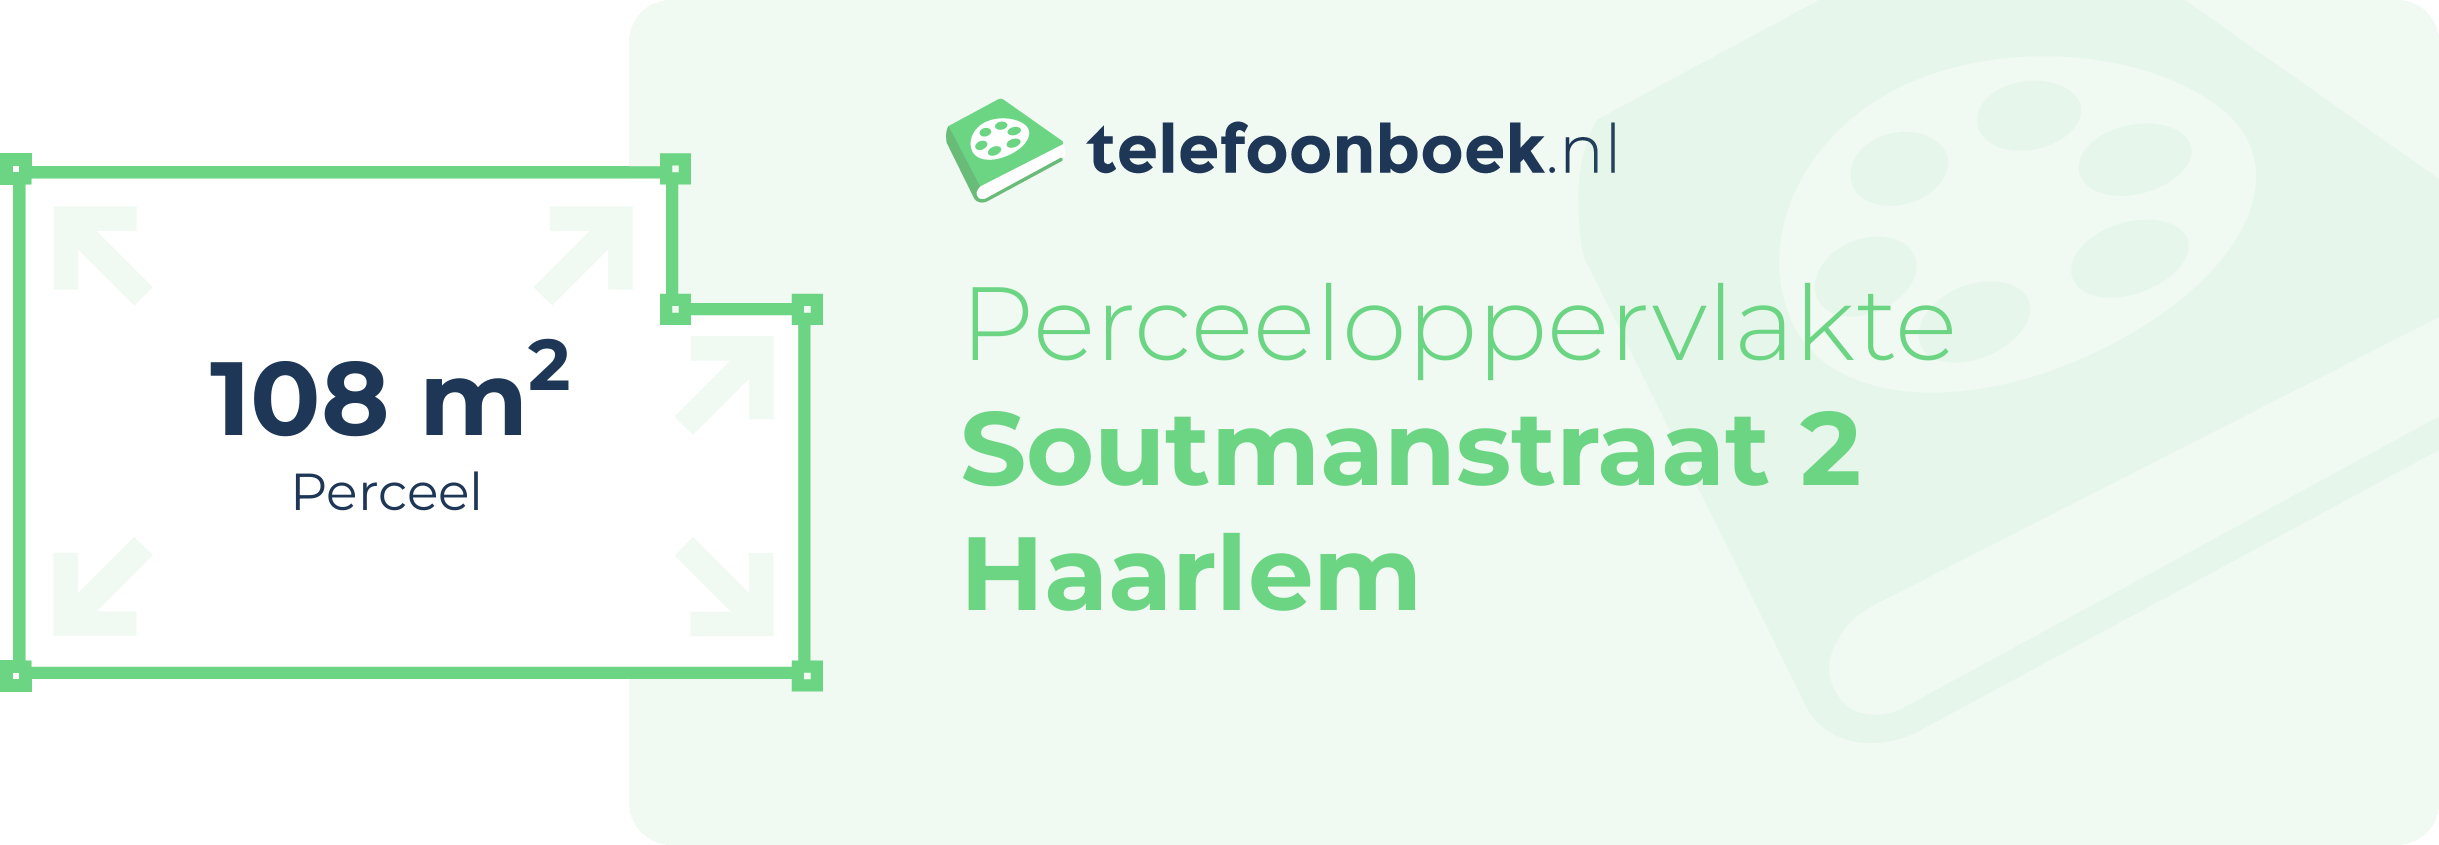 Perceeloppervlakte Soutmanstraat 2 Haarlem